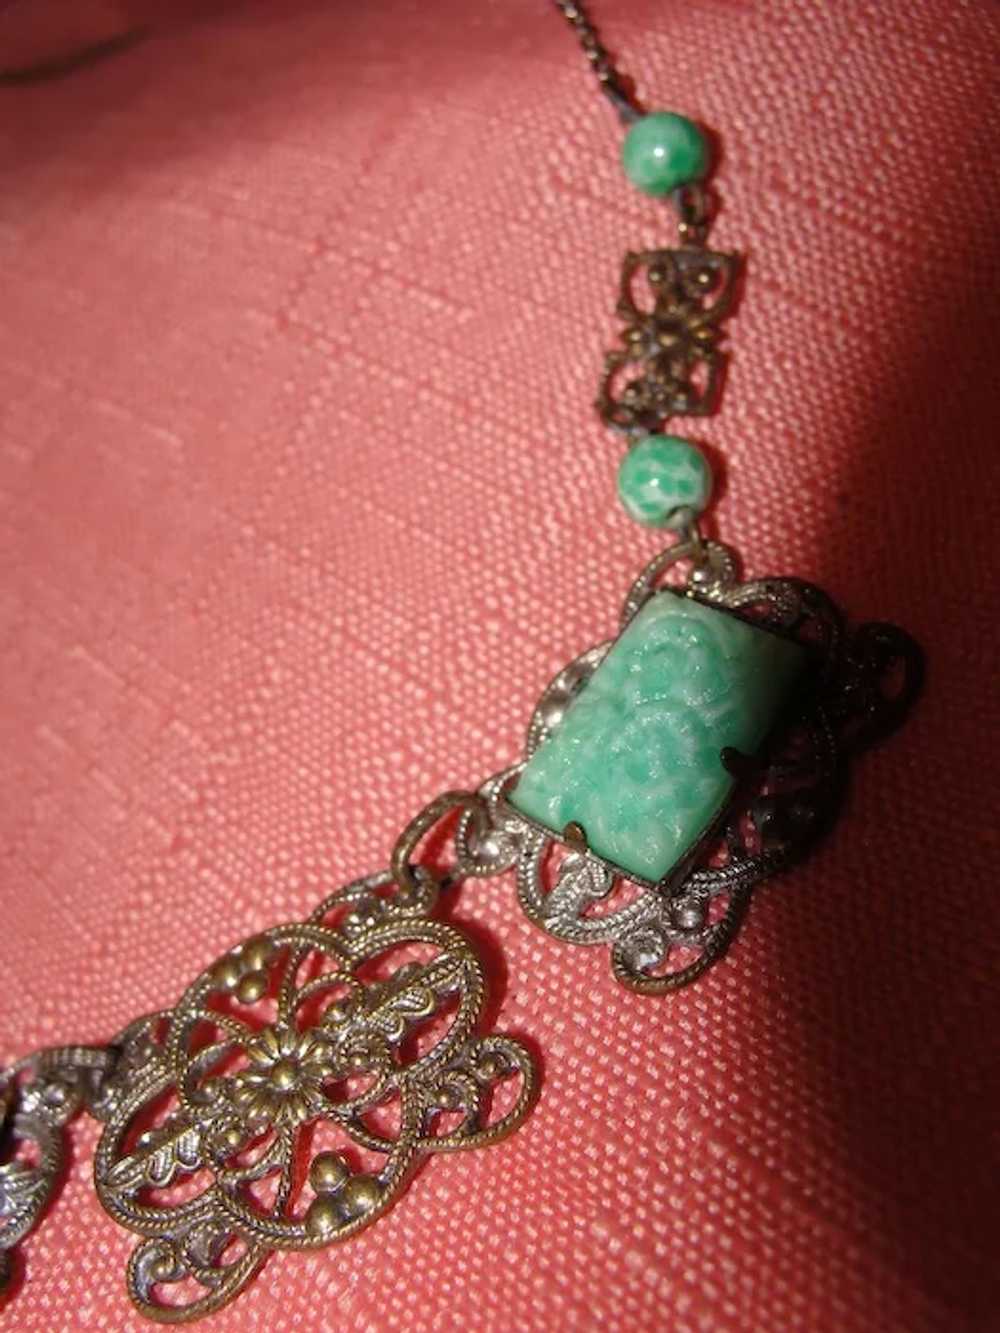 Jade-Like Green Stone Necklace - Free Shipping - image 3